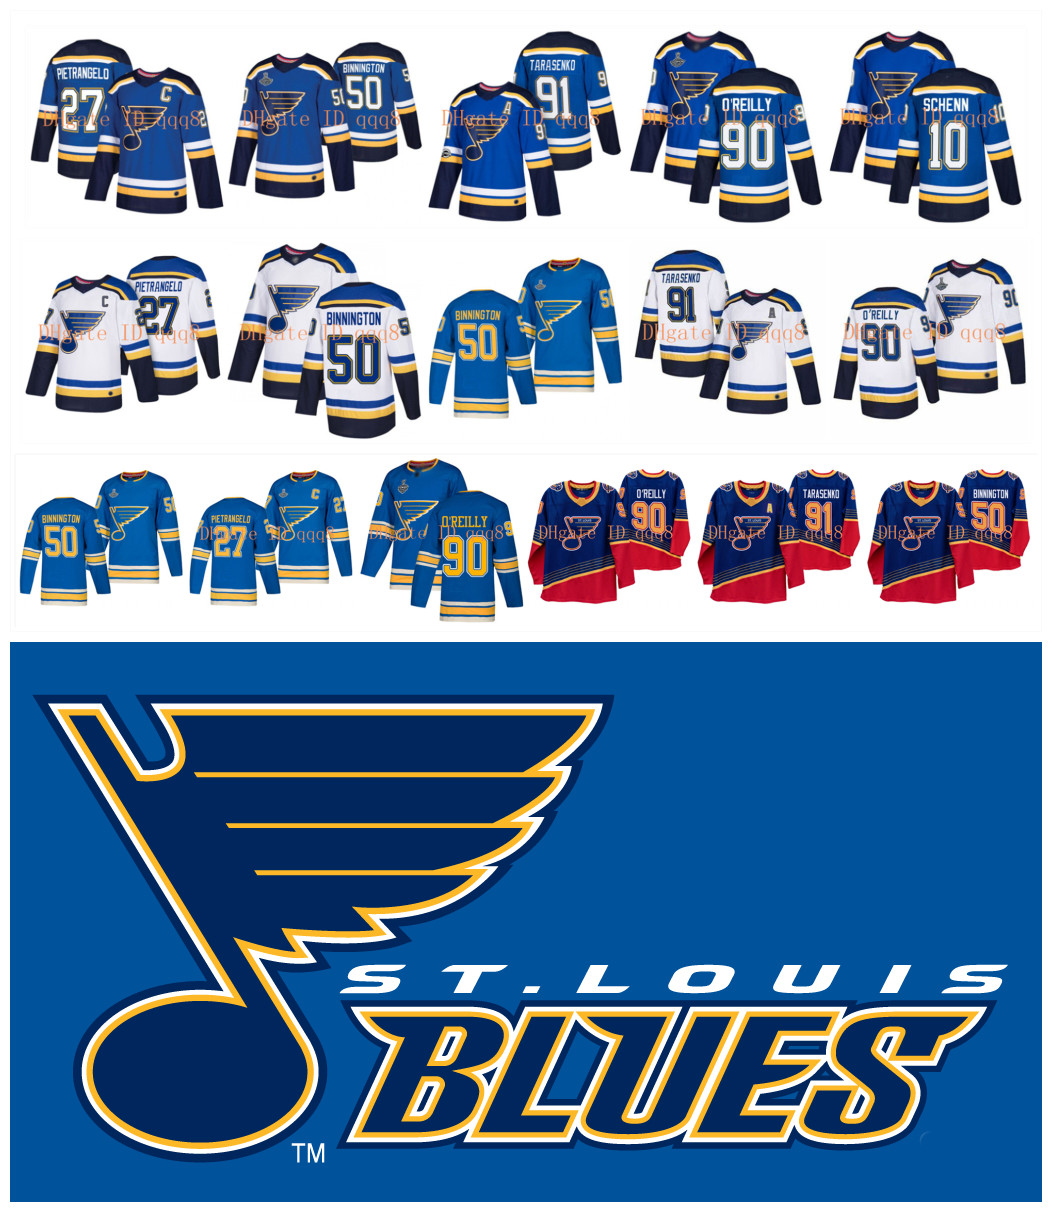 

St. Louis Blues Jersey 27 Alex Pietrangelo 90 Ryan O Reilly 50 Binnington 91 Vladimir Tarasenko 10 Brayden Schenn 90s Vintage Hockey Jerseys, As pic